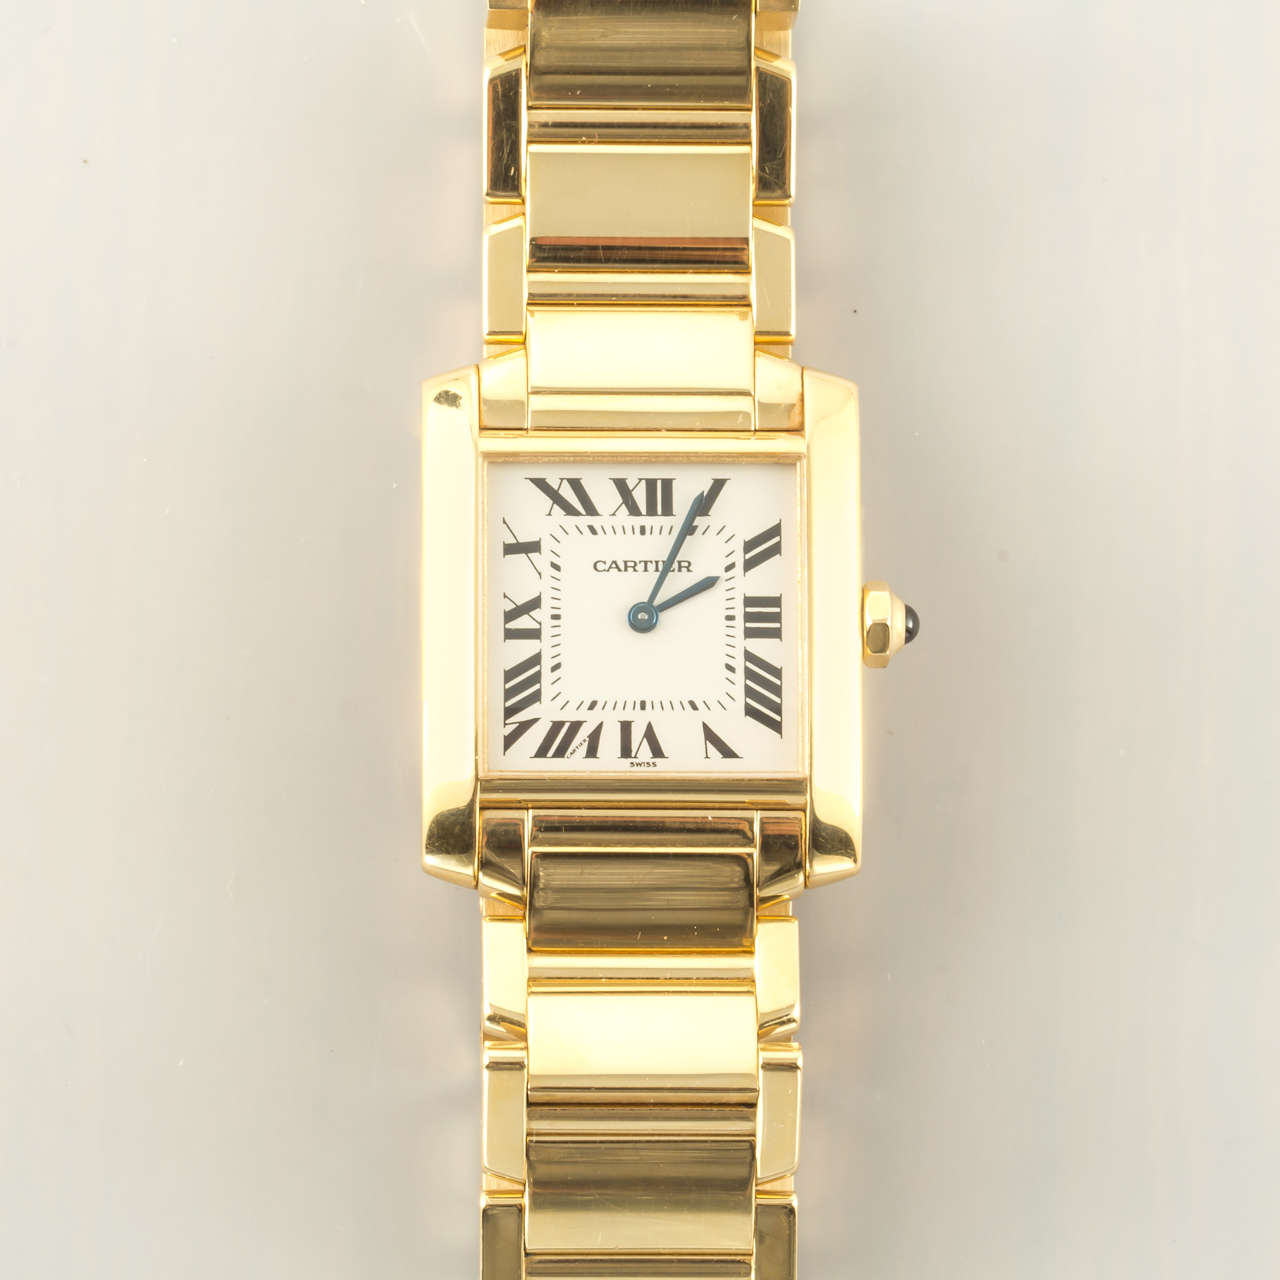 Cartier Lady's 18k Yellow Gold Tank Francaise Wristwatch, White Dial with Roman Numerals, Quartz Movement, Sapphire Cabochon Crown